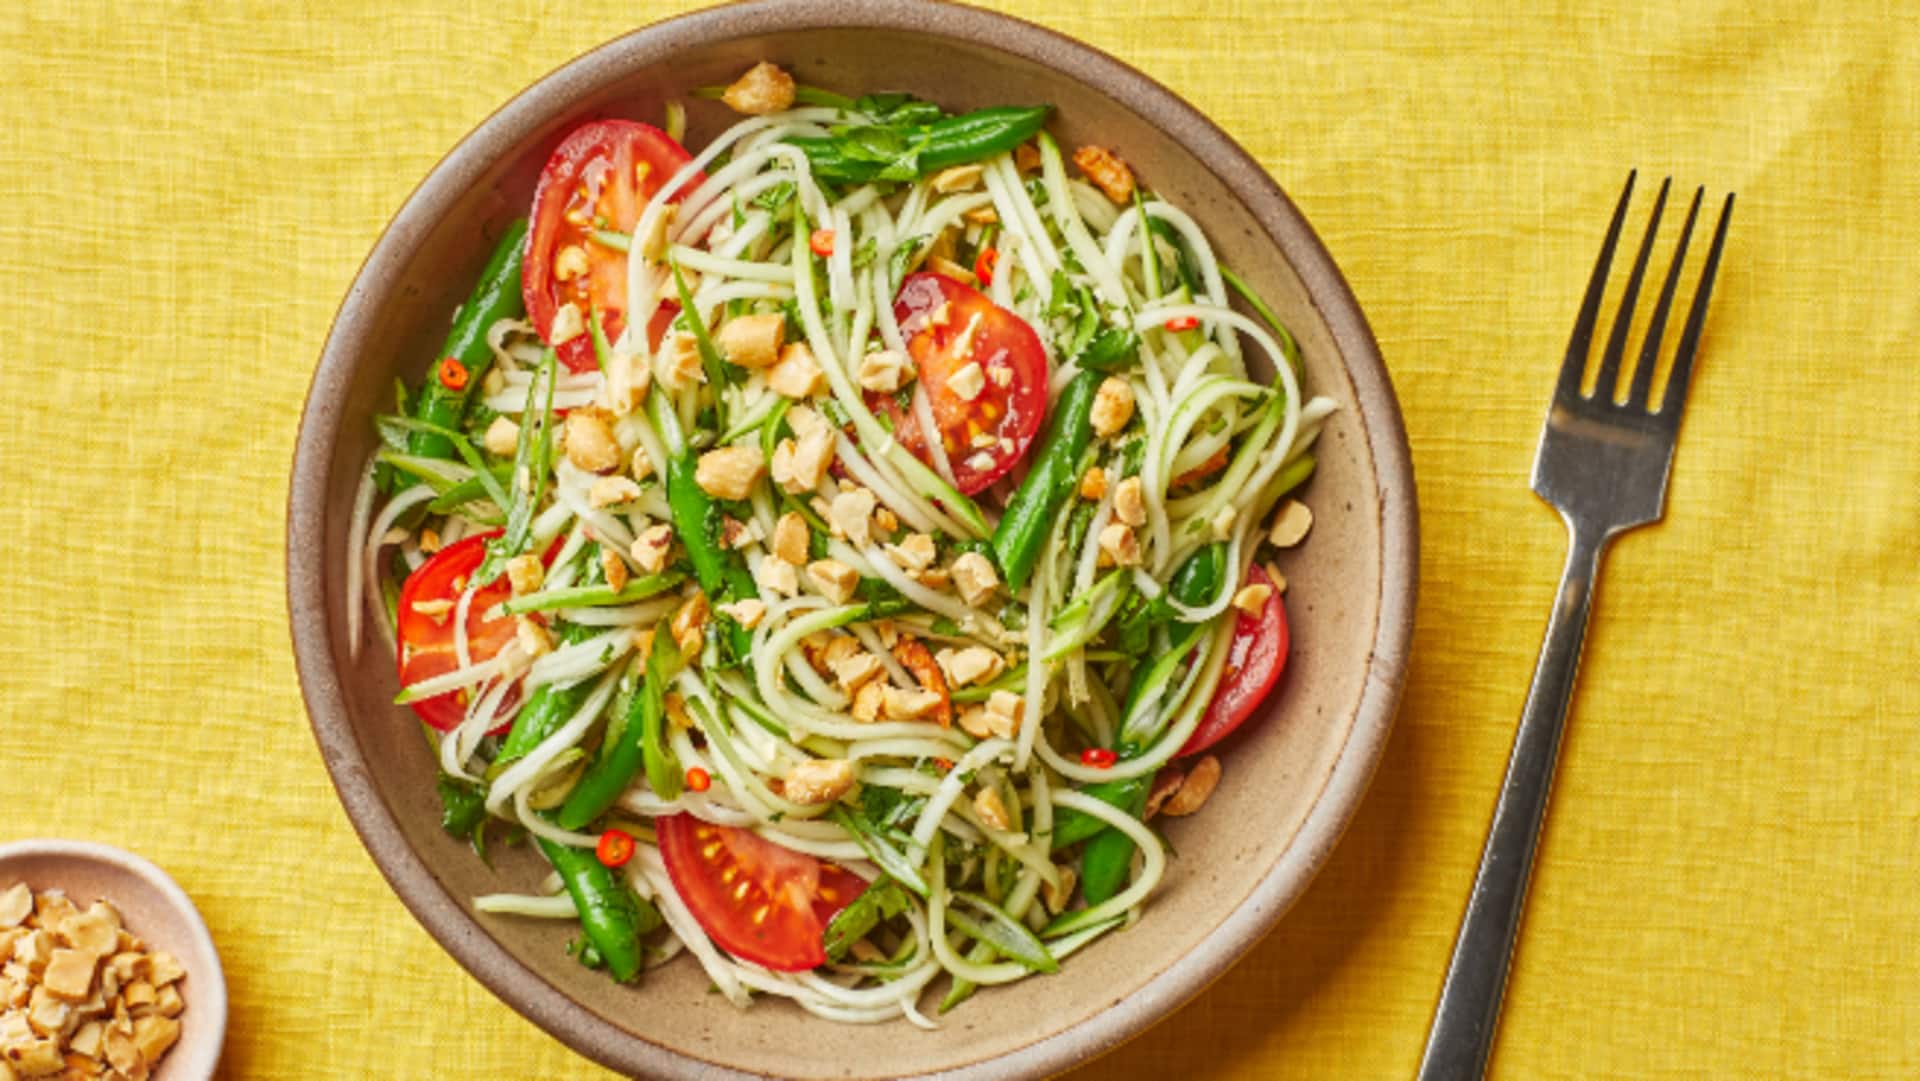 Health freaks will love this Thai green papaya salad recipe